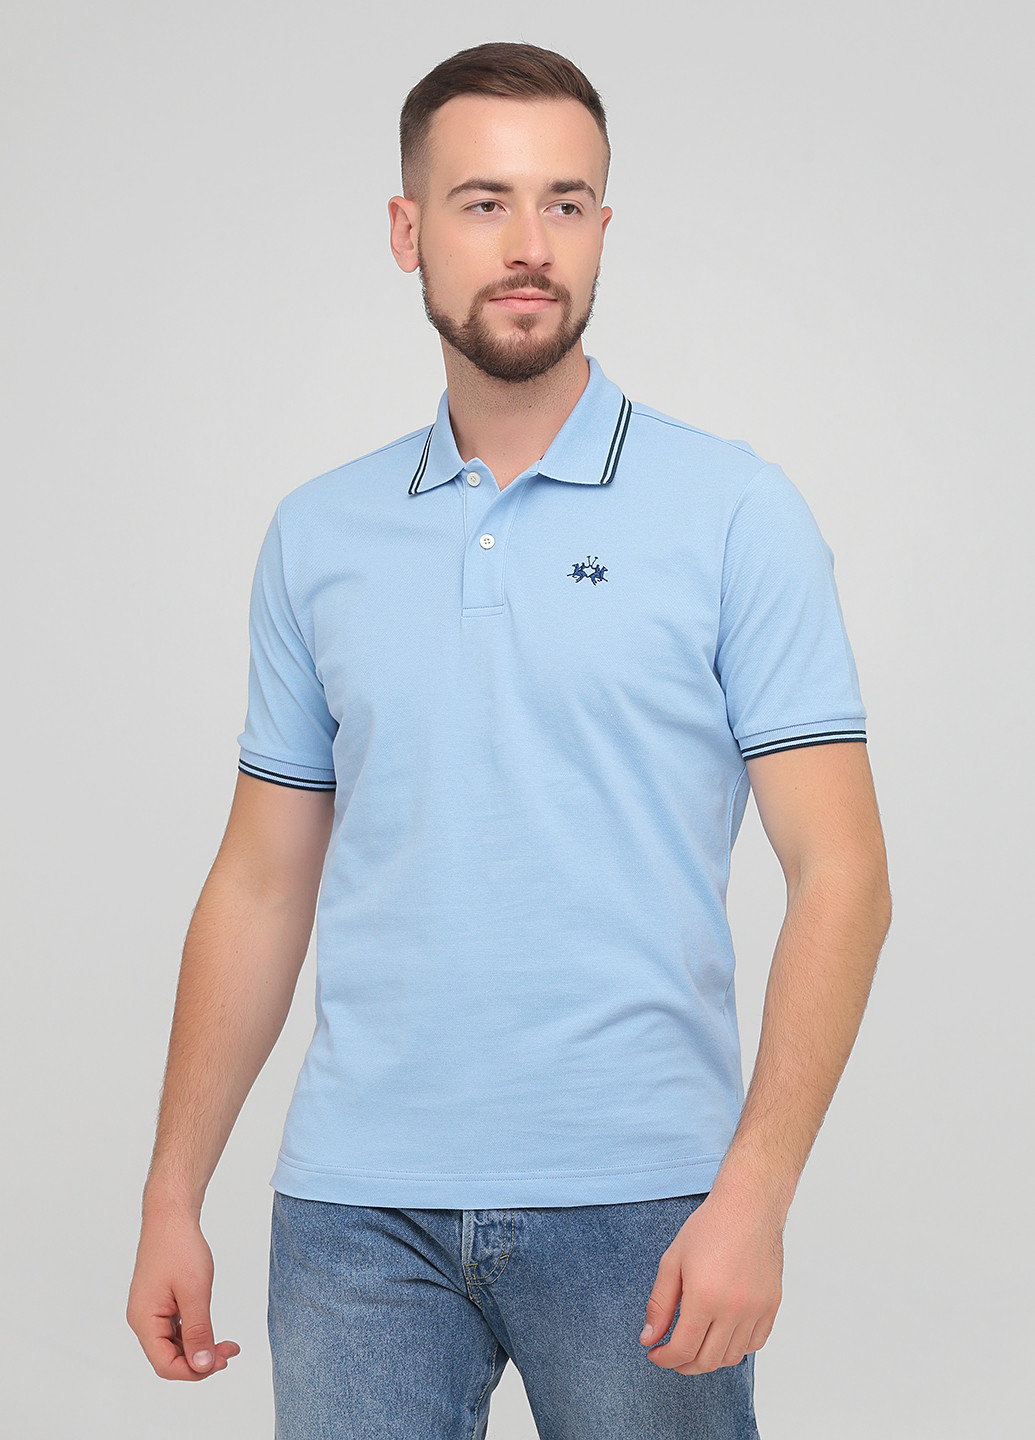 Голубой футболка-поло для мужчин La Martina меланжевая